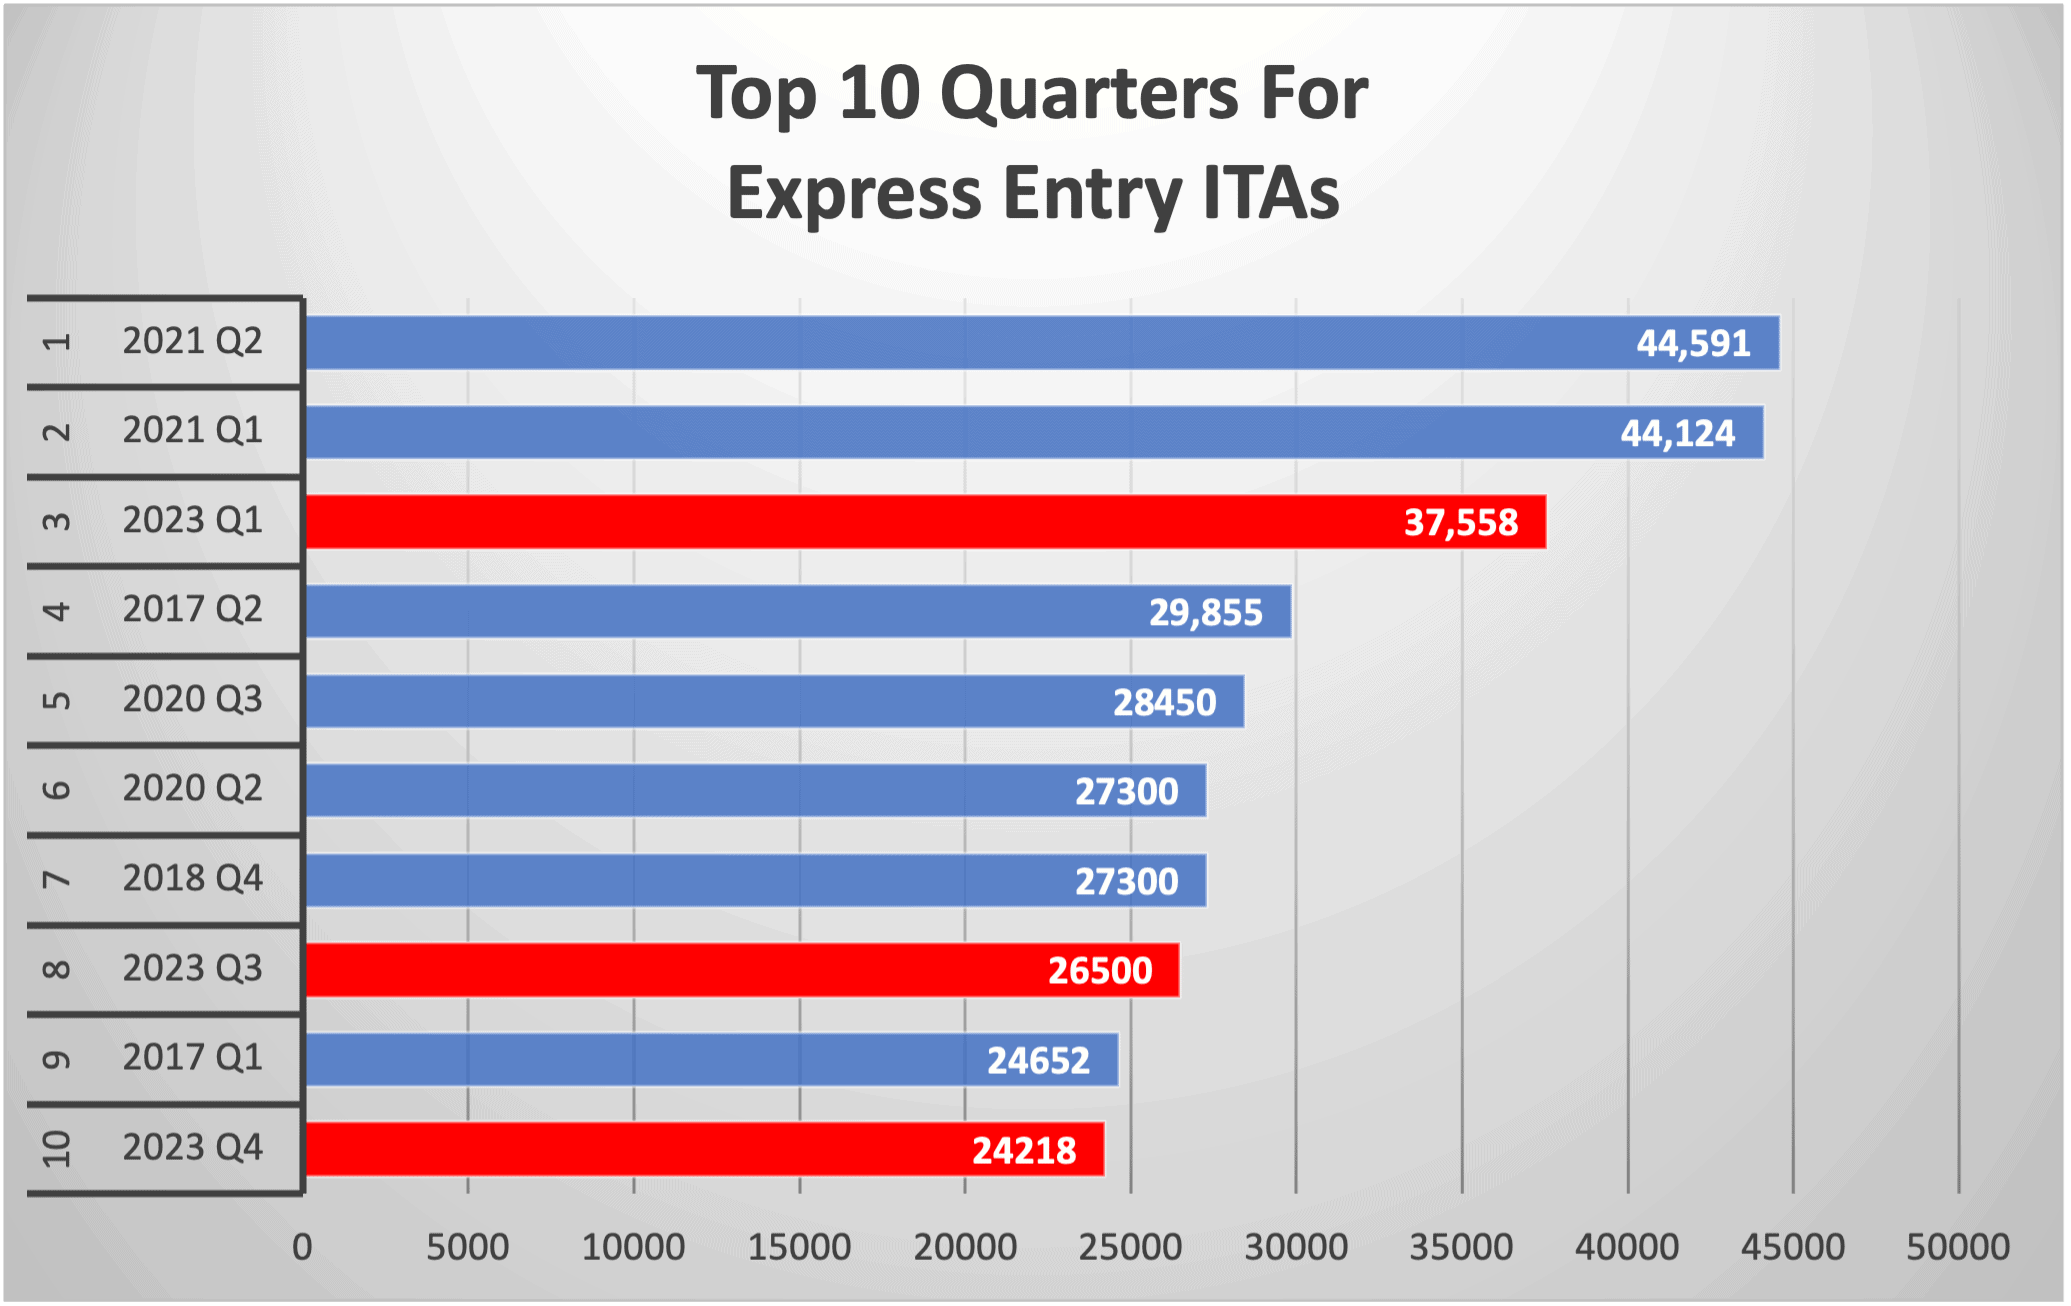 Top 10 Quarters For Express Entry ITAs